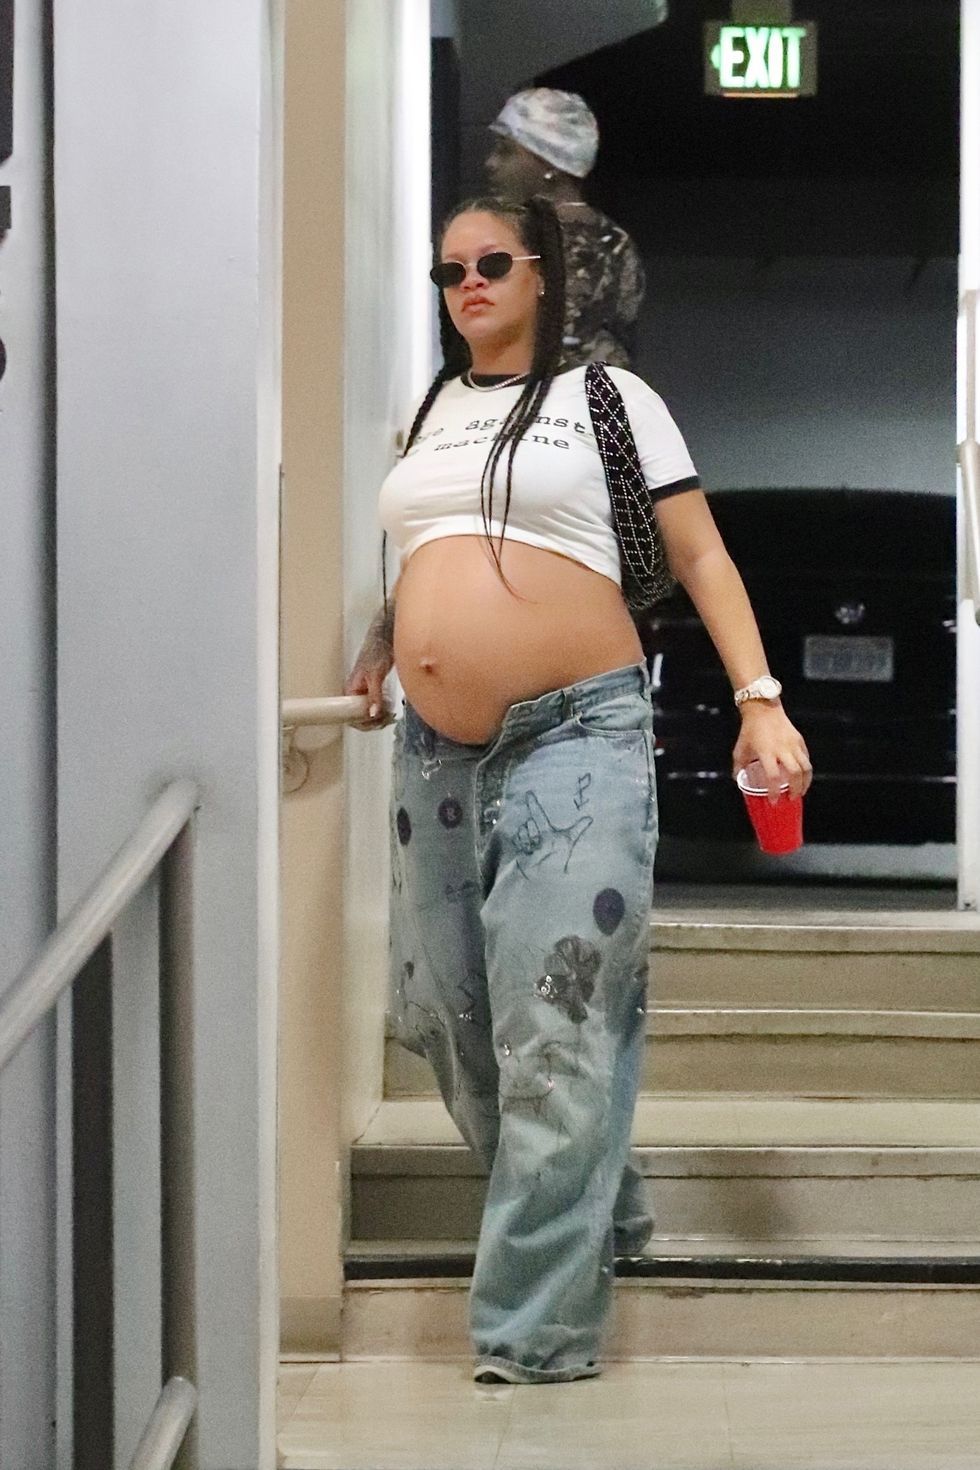 Rihanna is pregnant